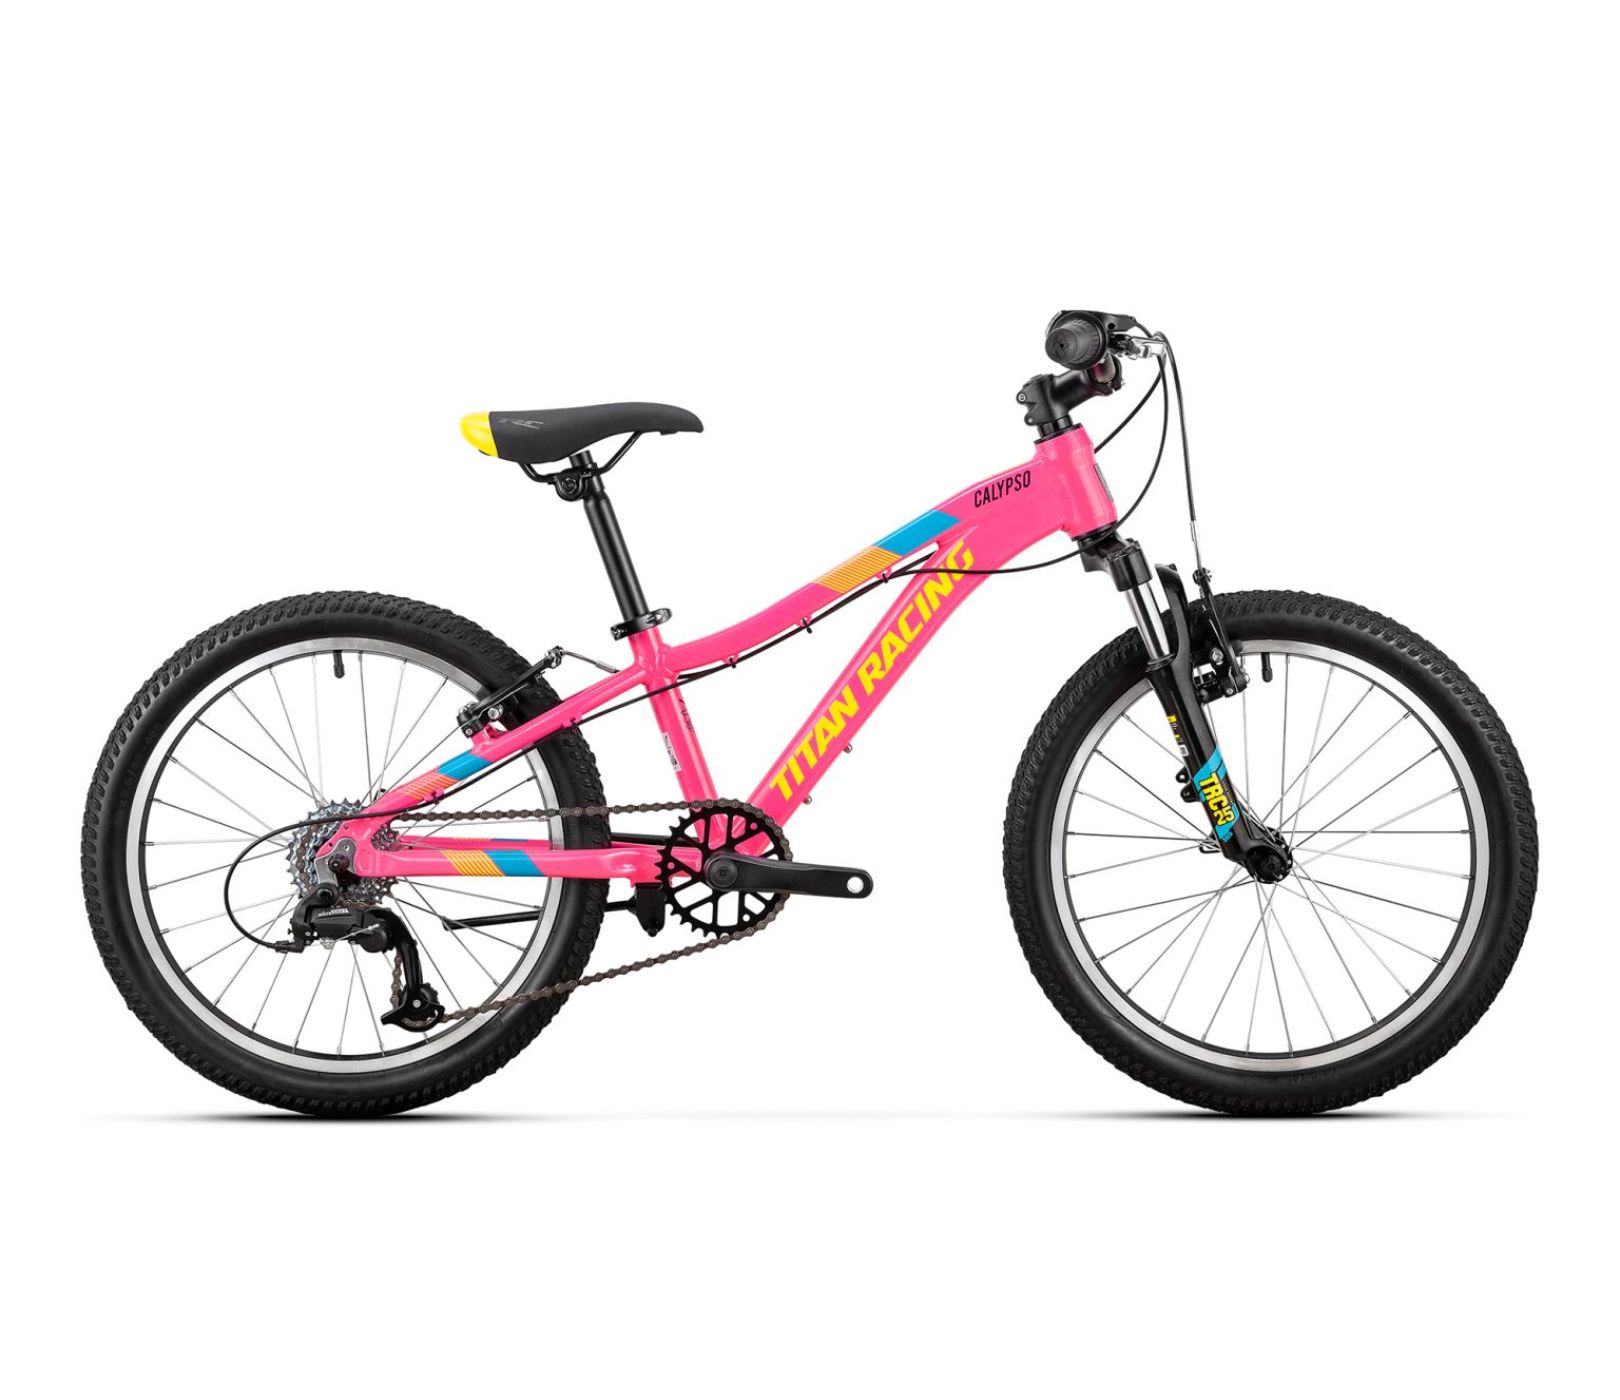 2022 Titan Calypso 20 inch Junior Girls Bike